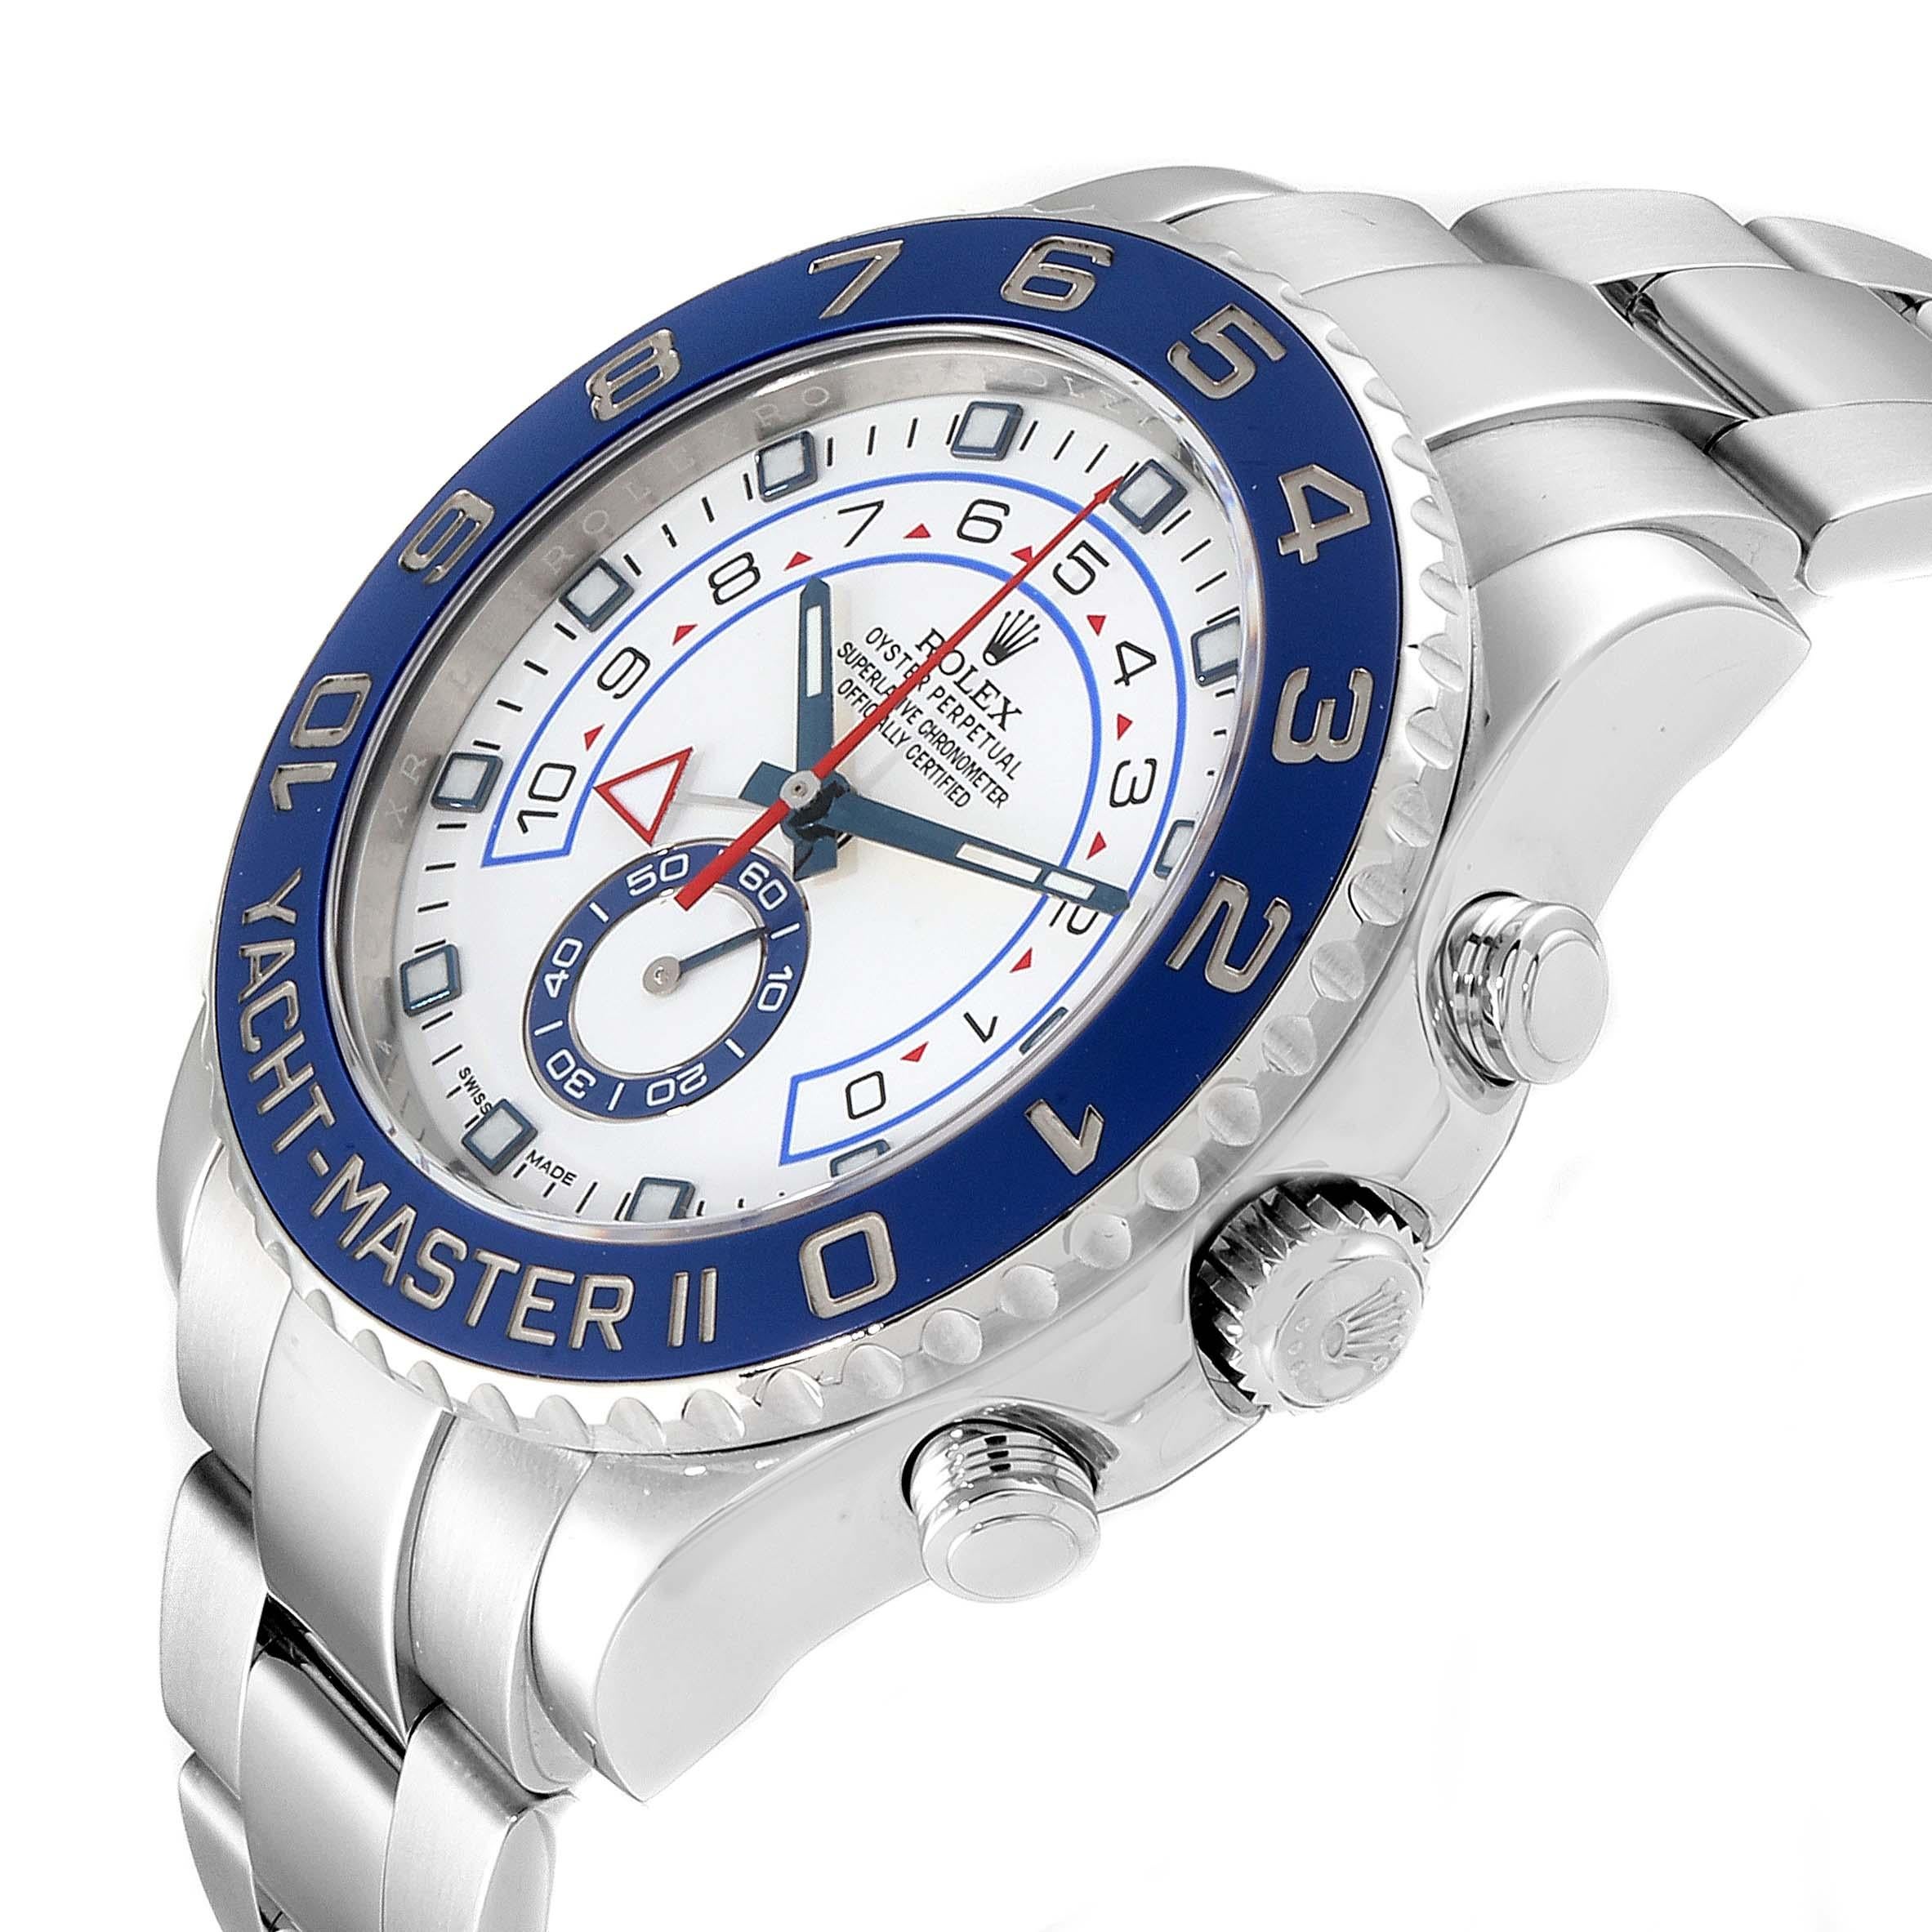 Rolex Yachtmaster II Stainless Steel Blue Bezel Men's Watch 116680 1